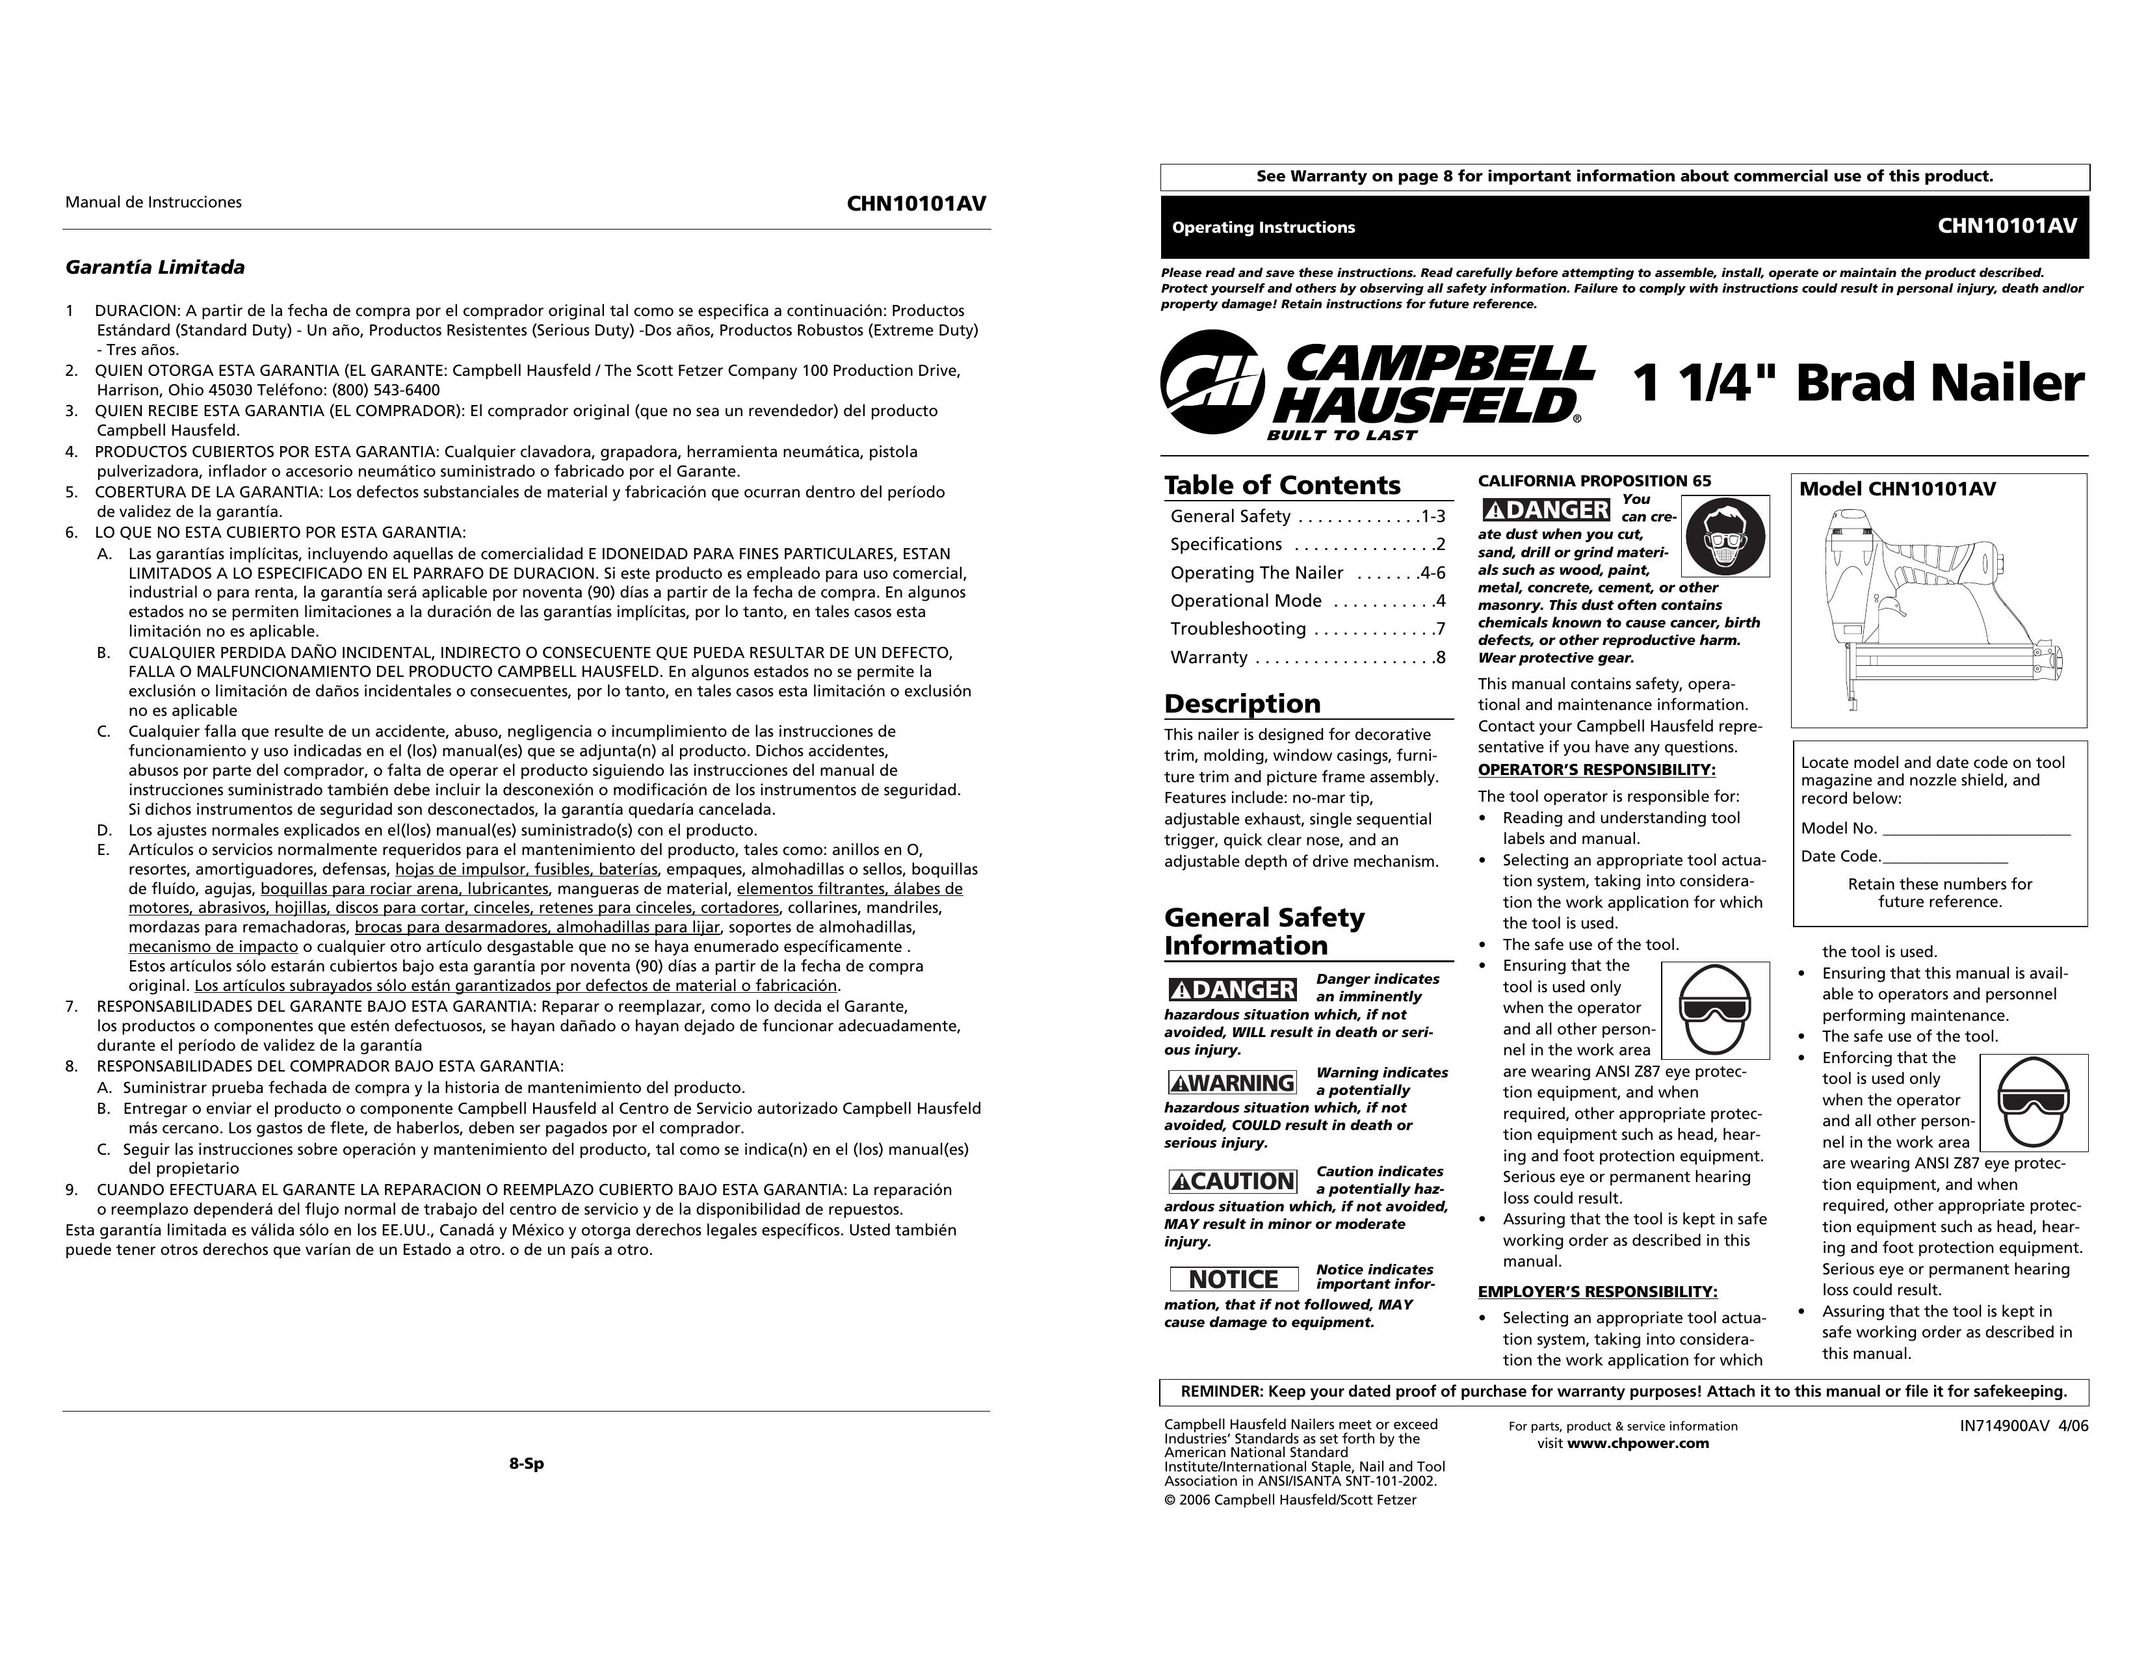 Campbell Hausfeld CHN10101AV Garage Door Opener User Manual